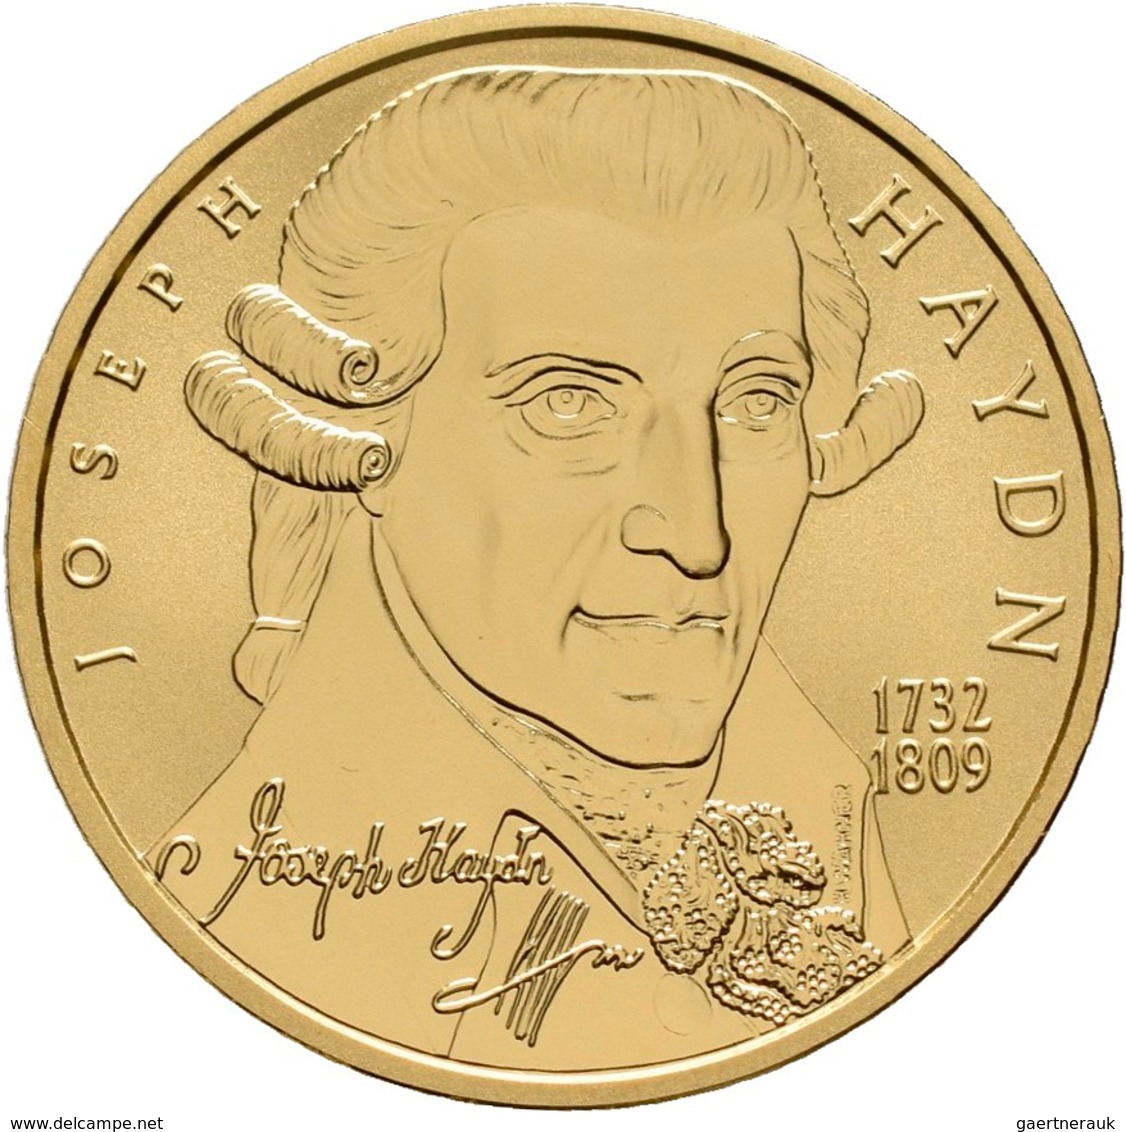 Österreich - Anlagegold: 50 Euro 2004 Grosse Komponisten - Joseph Haydn. KM# 3110, Fb 941. In Kapsel - Oostenrijk